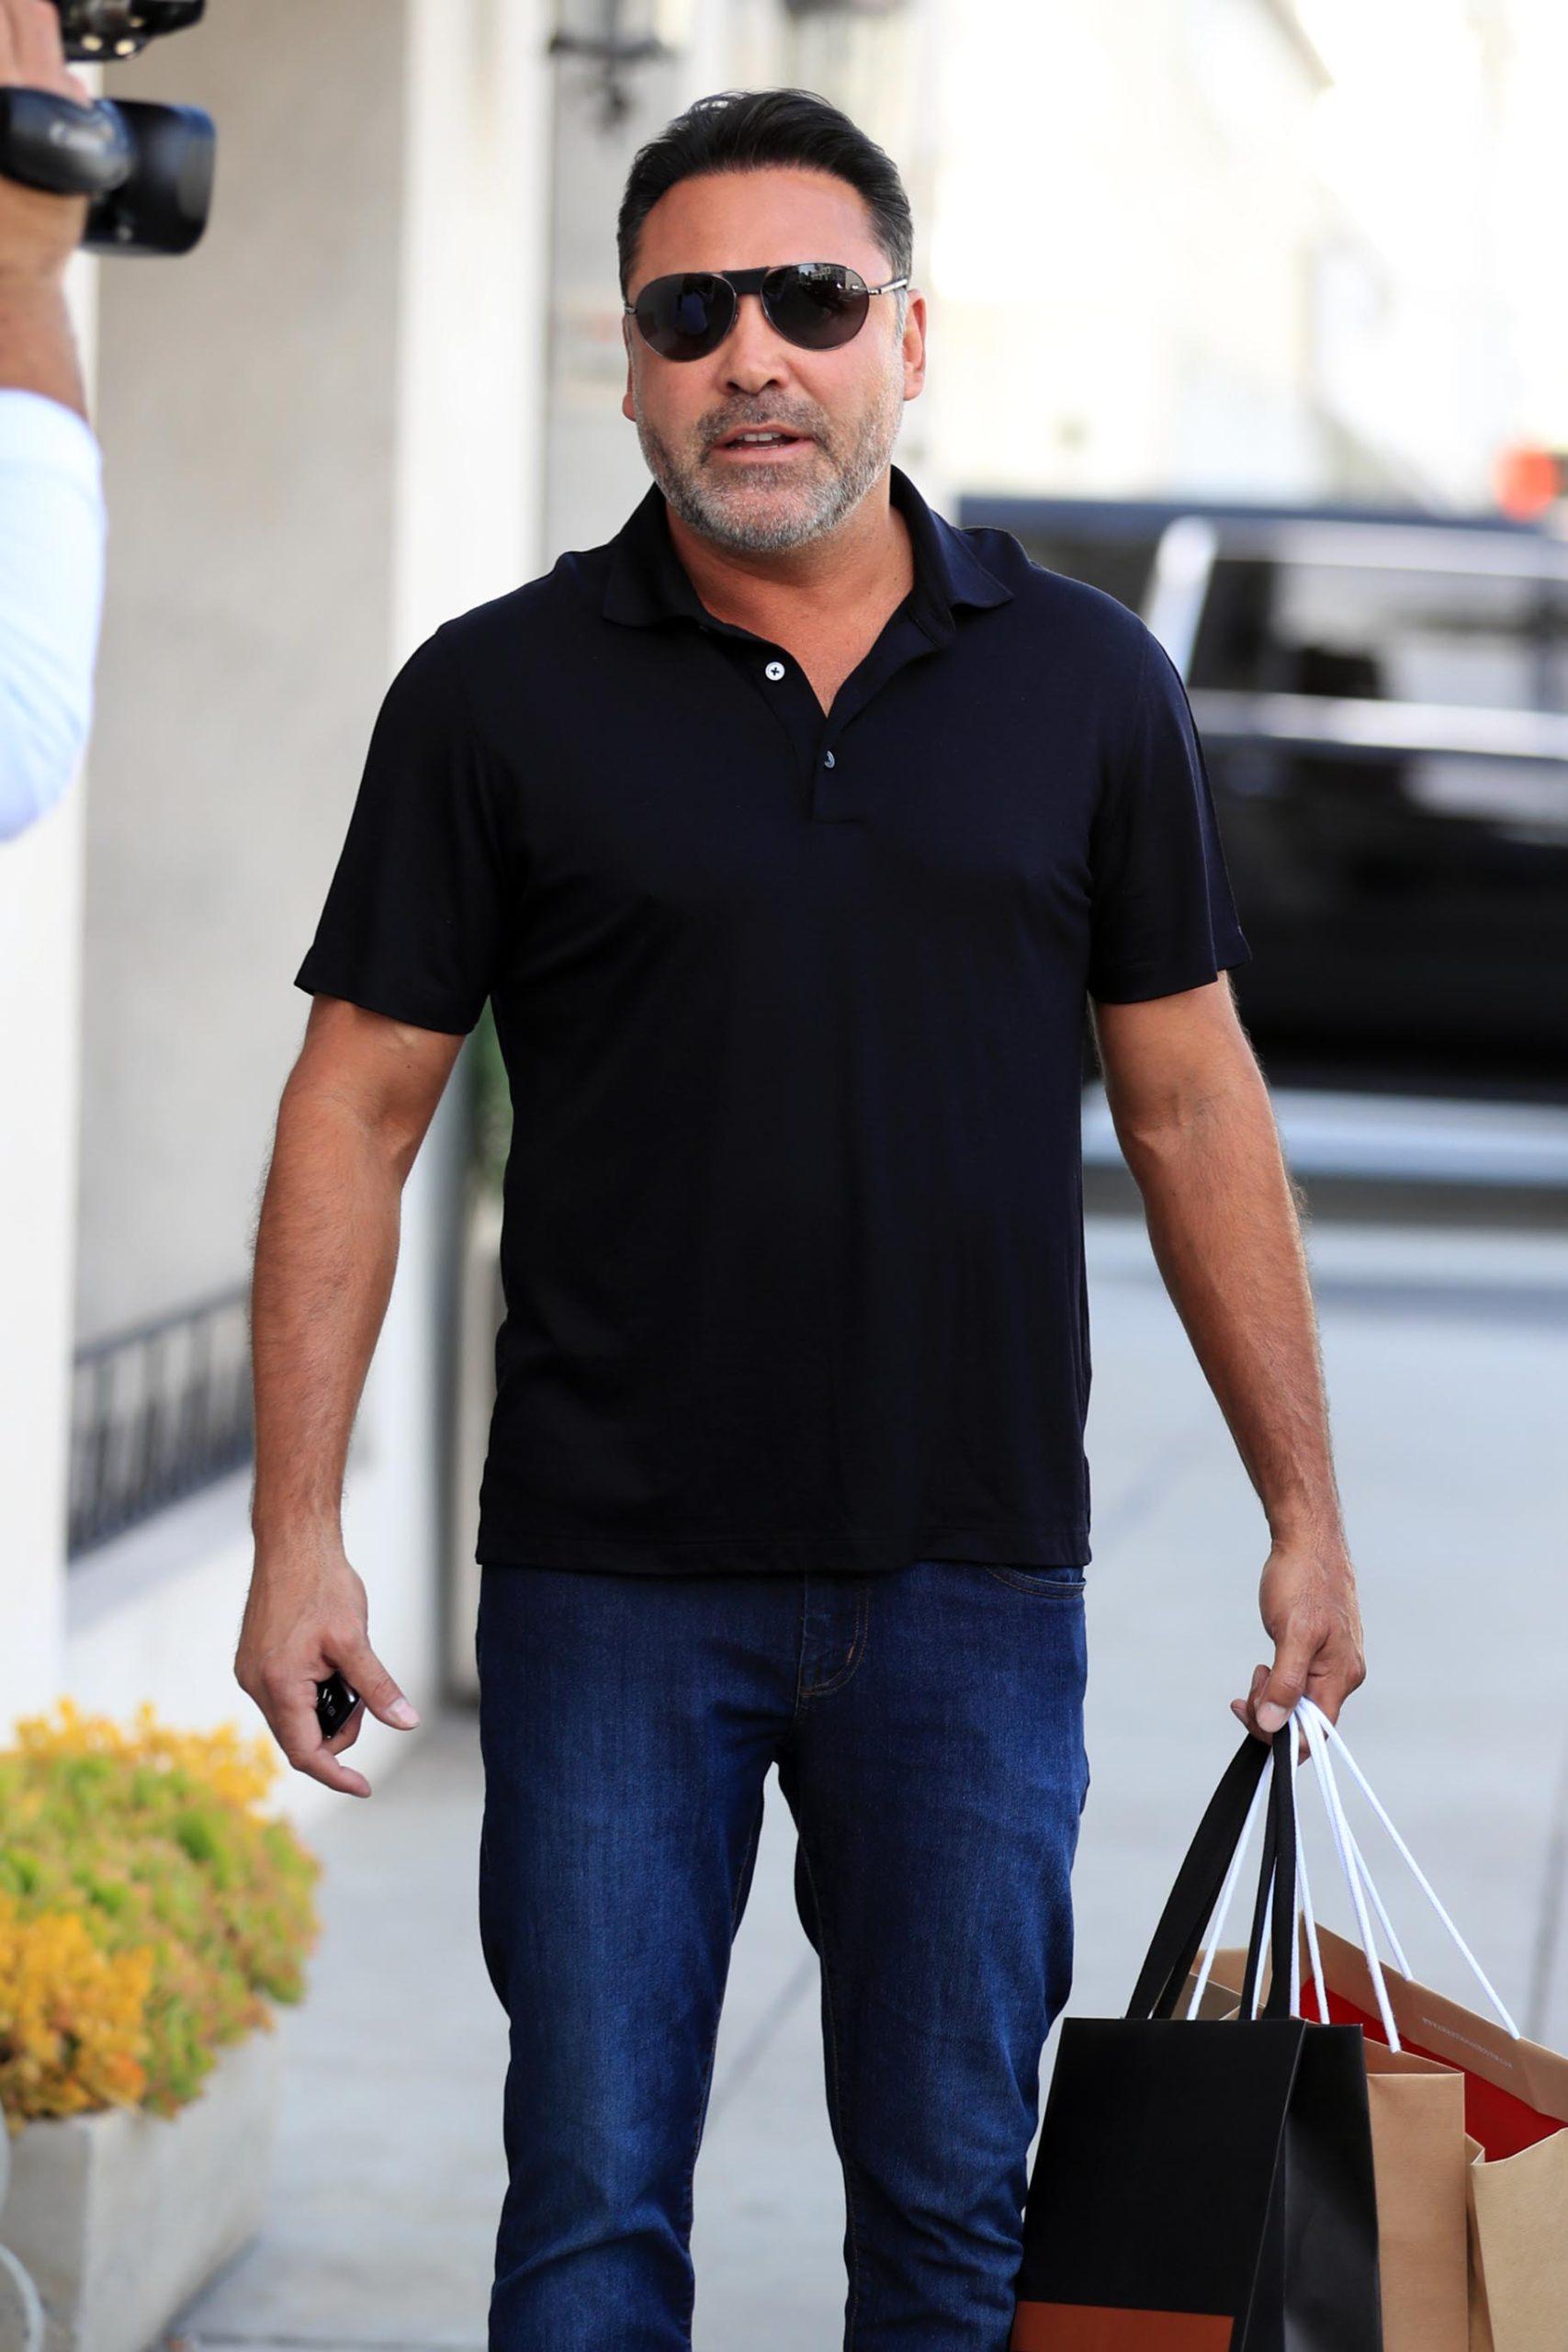 Oscar De La Hoya amp Holly Sonders are seen leaving Christian Louboutin store in Beverly Hills